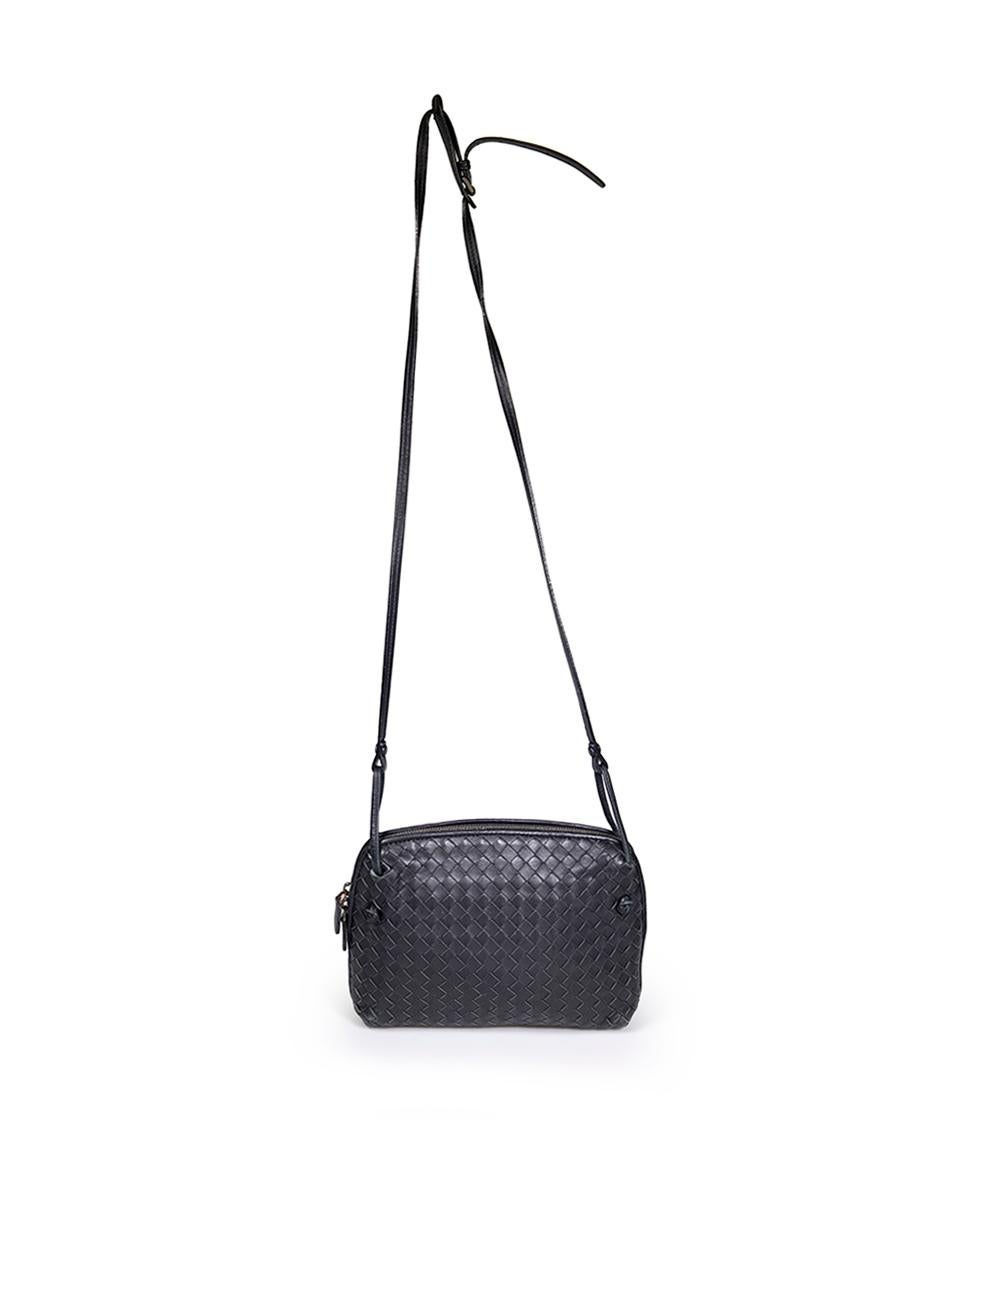 Bottega Veneta Black Leather Intercciato Bag In Good Condition In London, GB